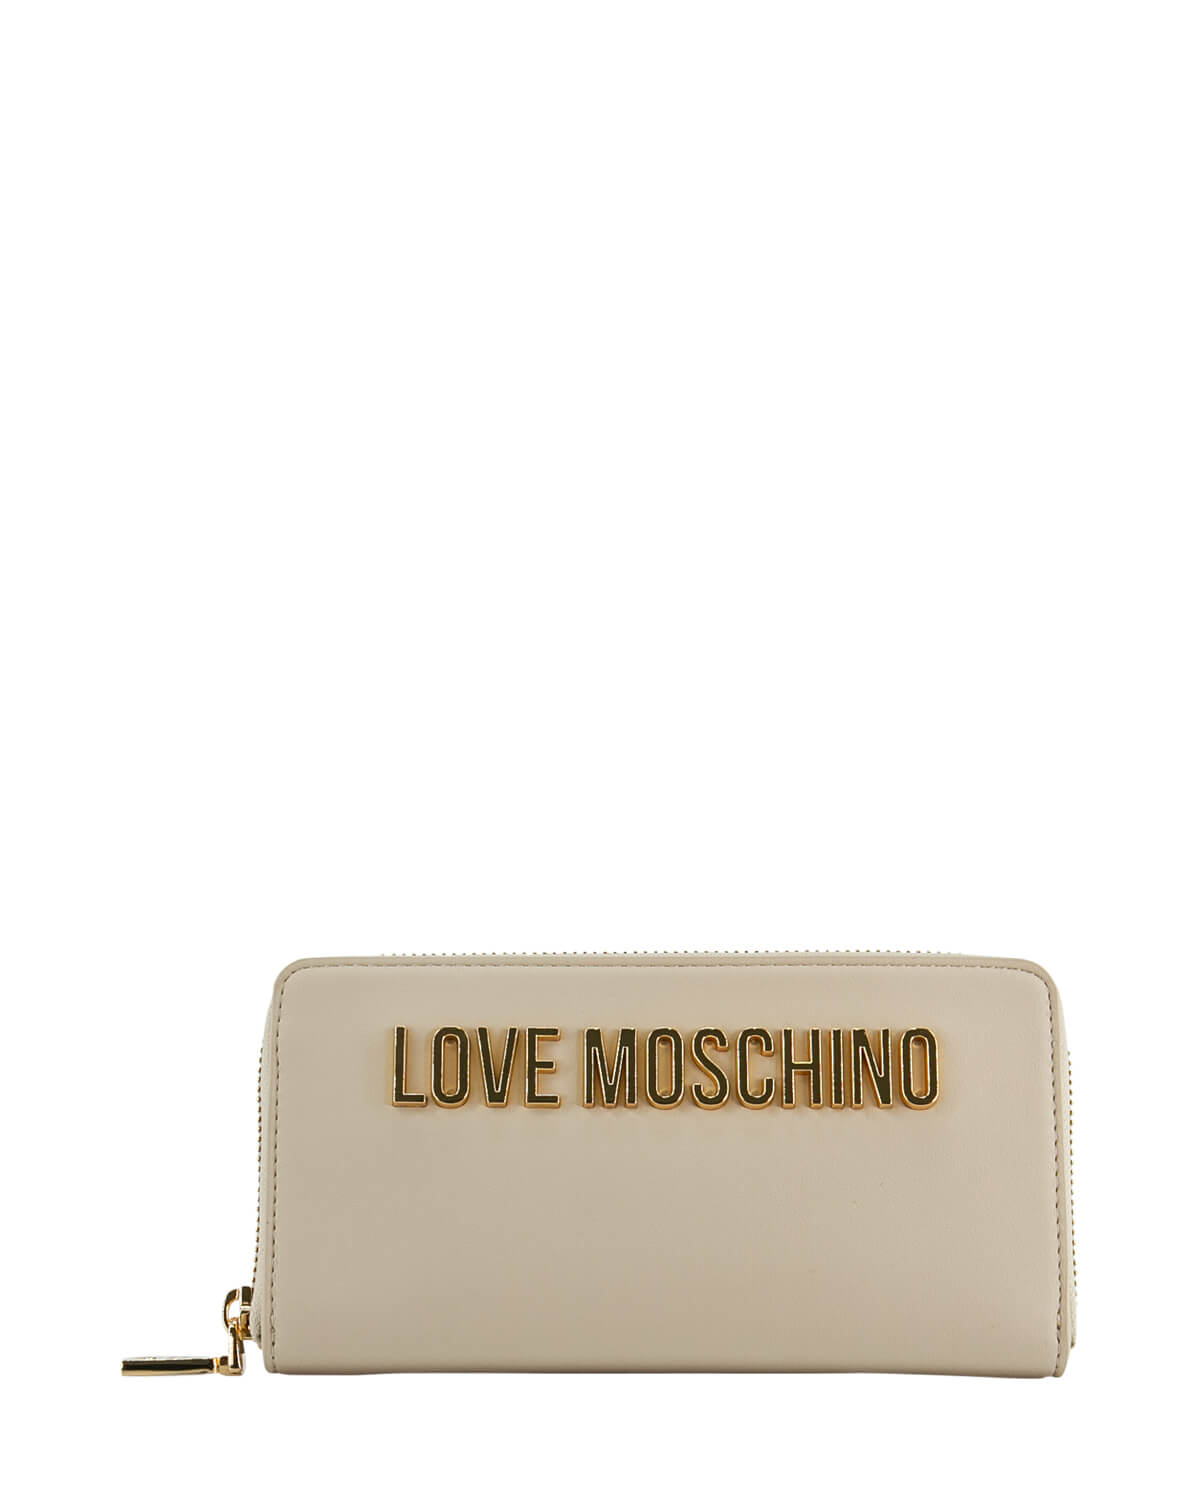 Love Moschino Shopper 'BOLD LOVE' em Preto